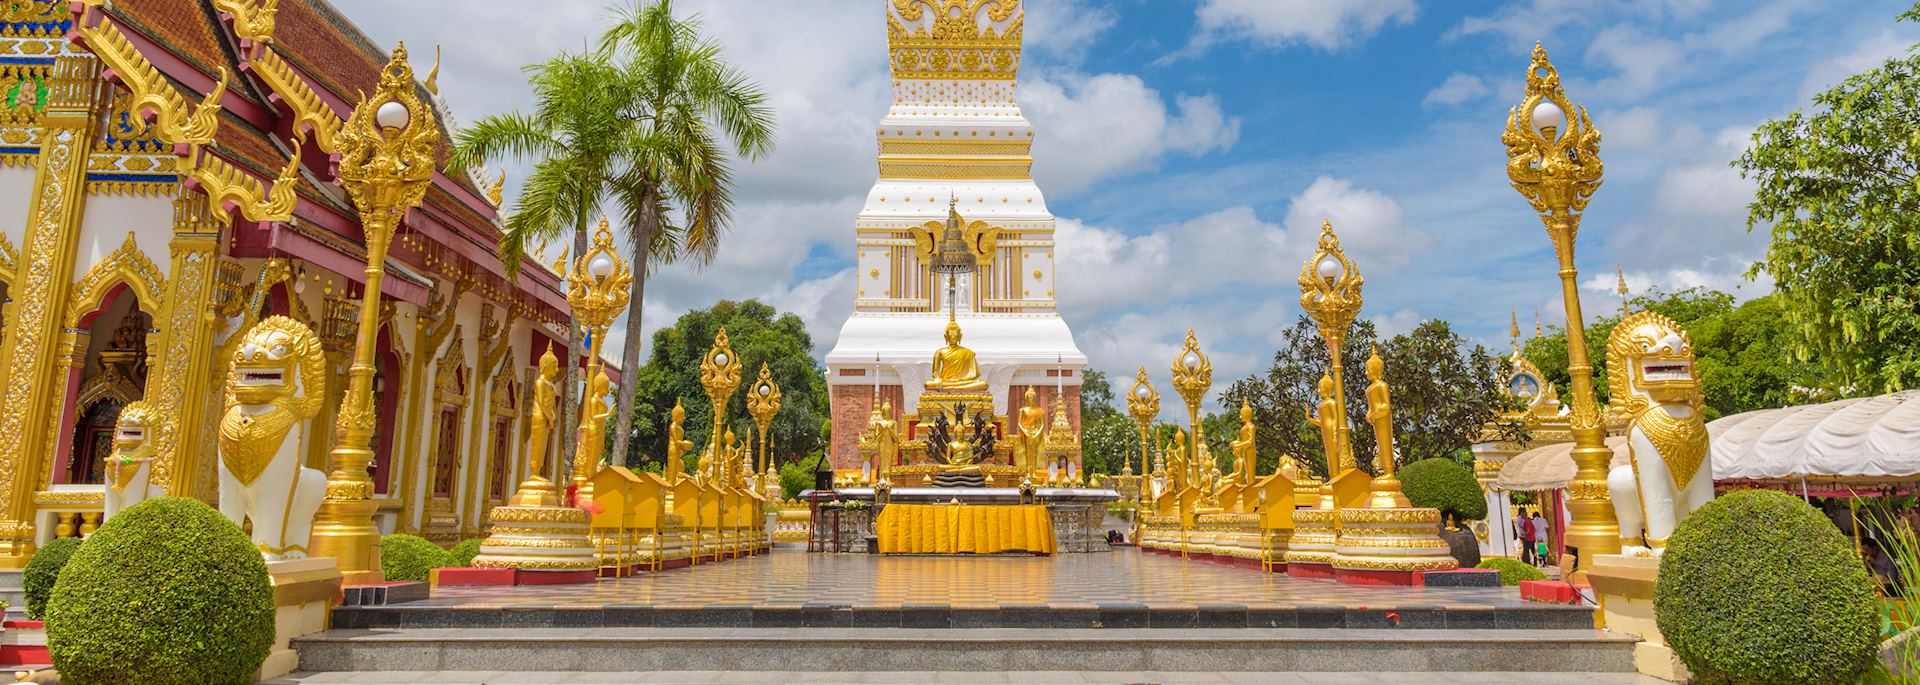 Wat Phra That Phanom temple, Nakhon Phanom